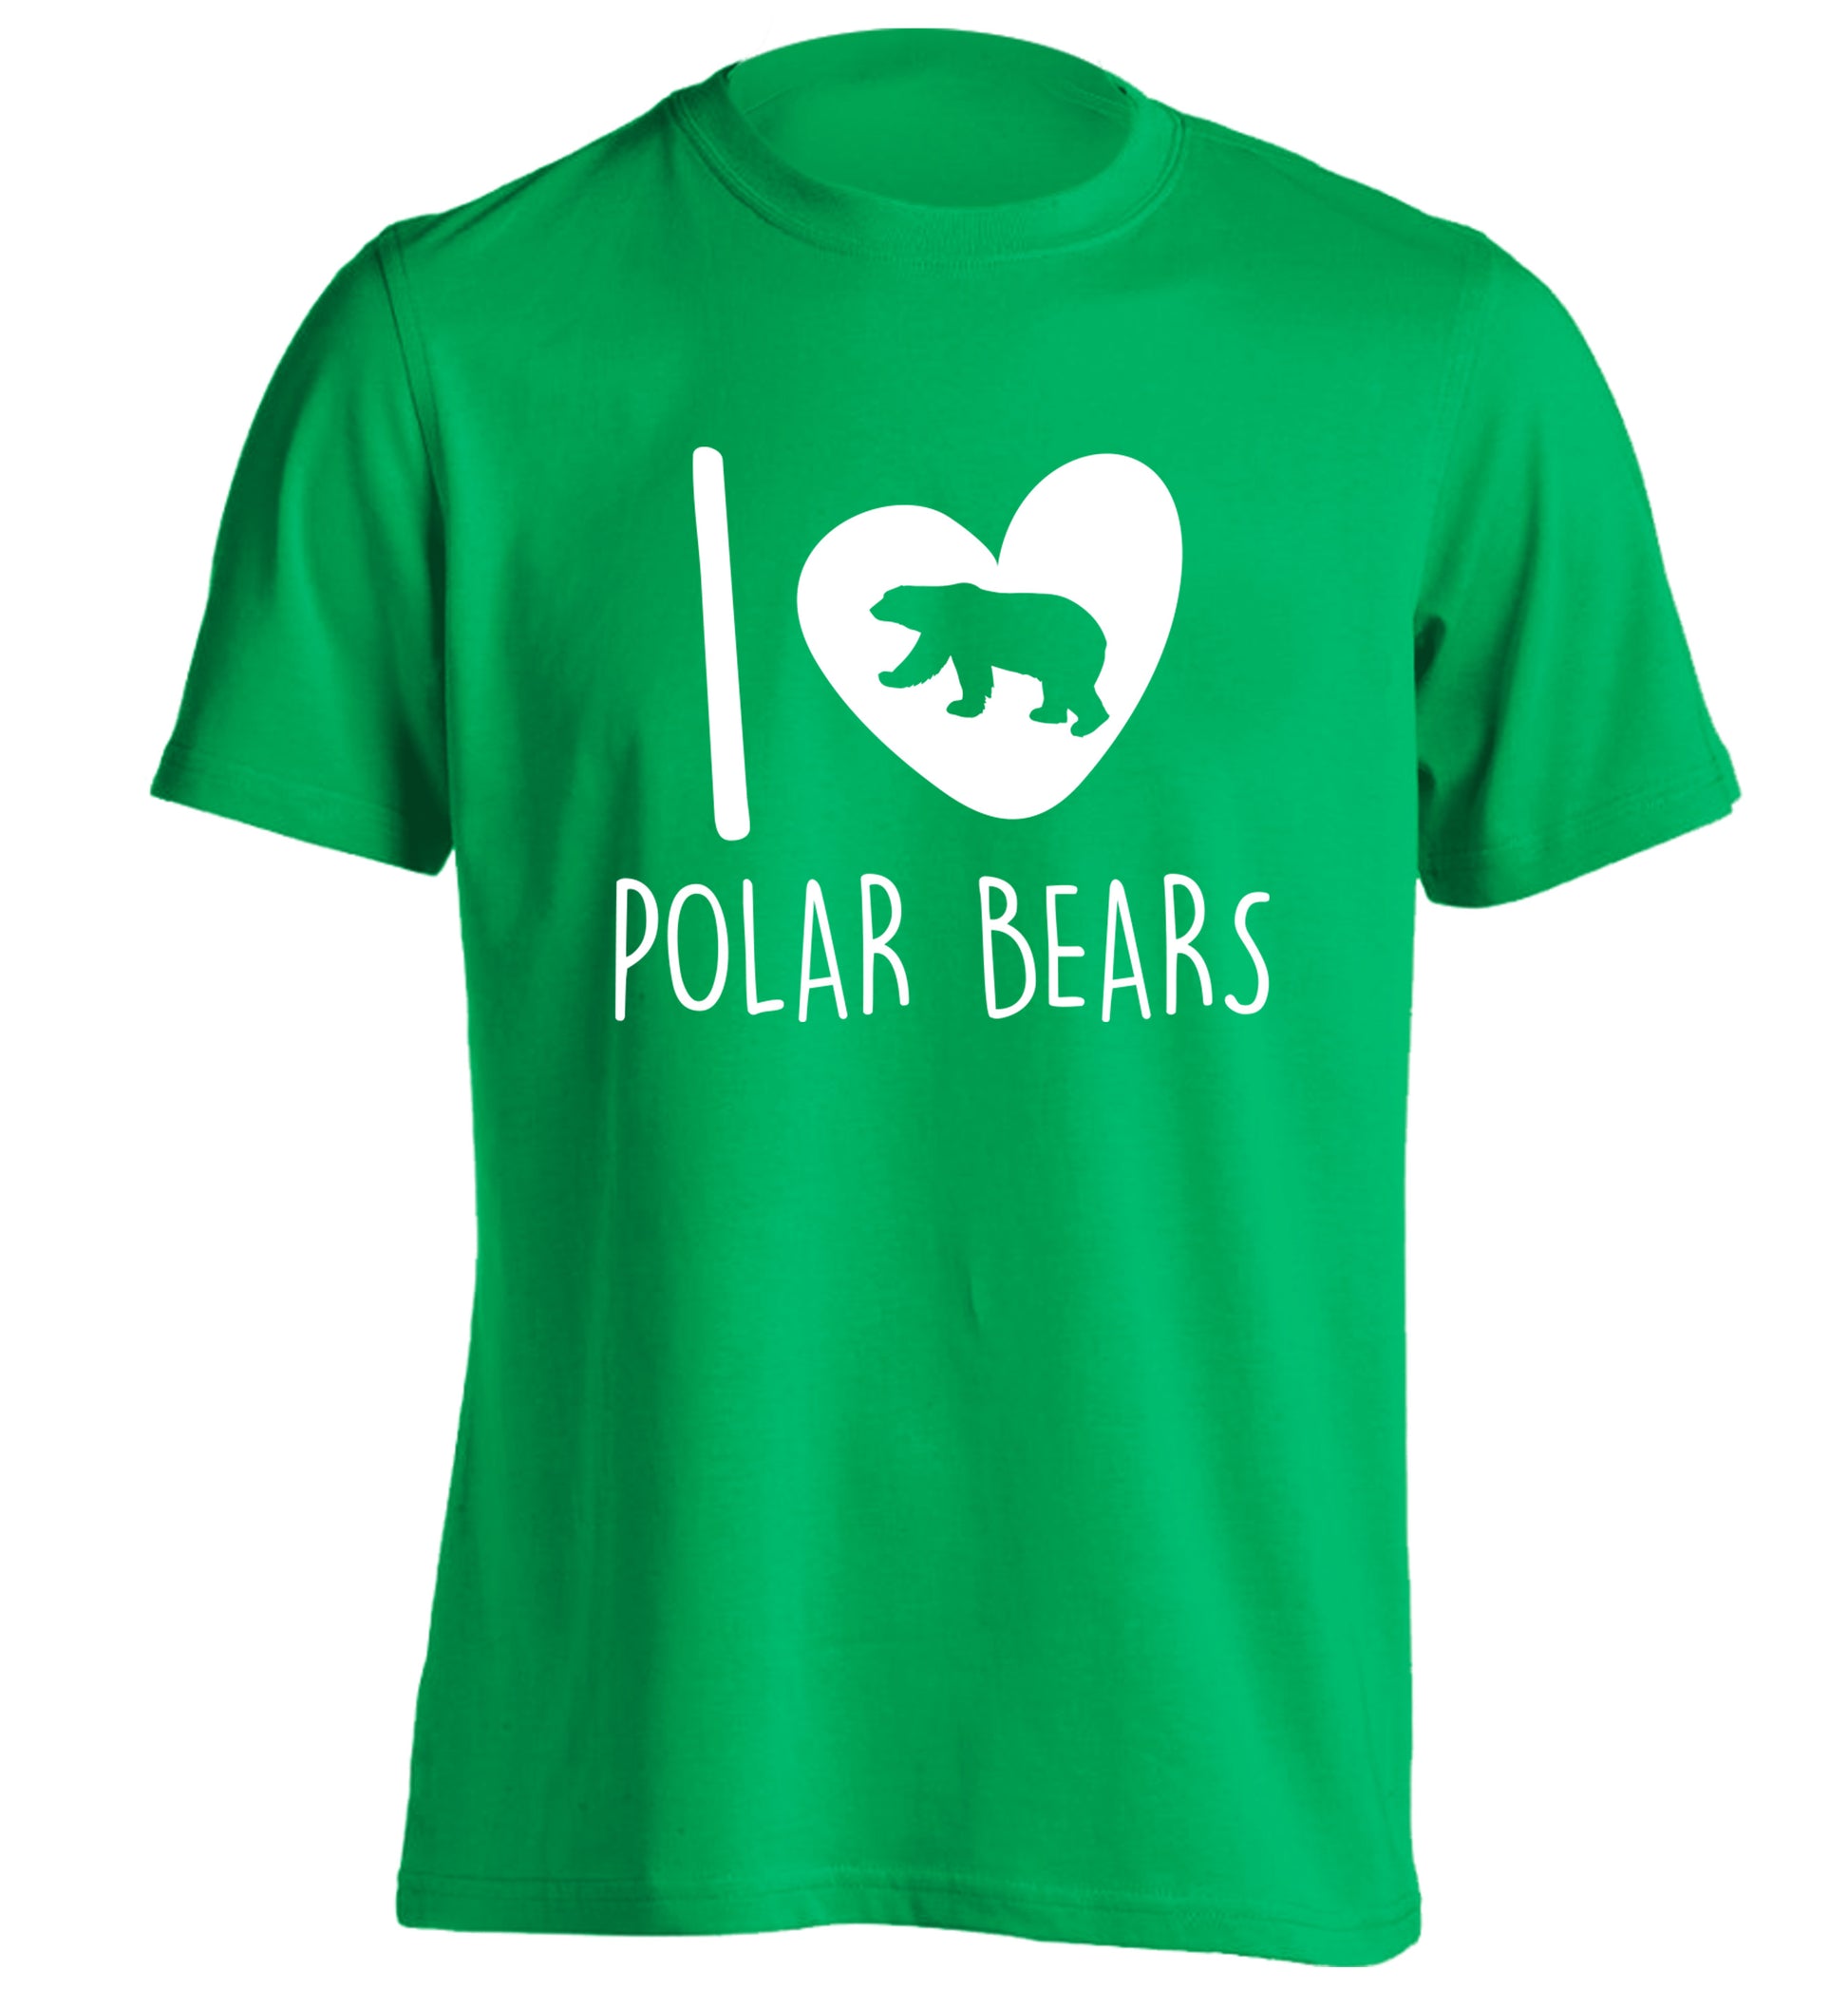 I Love Polar Bears adults unisex green Tshirt 2XL